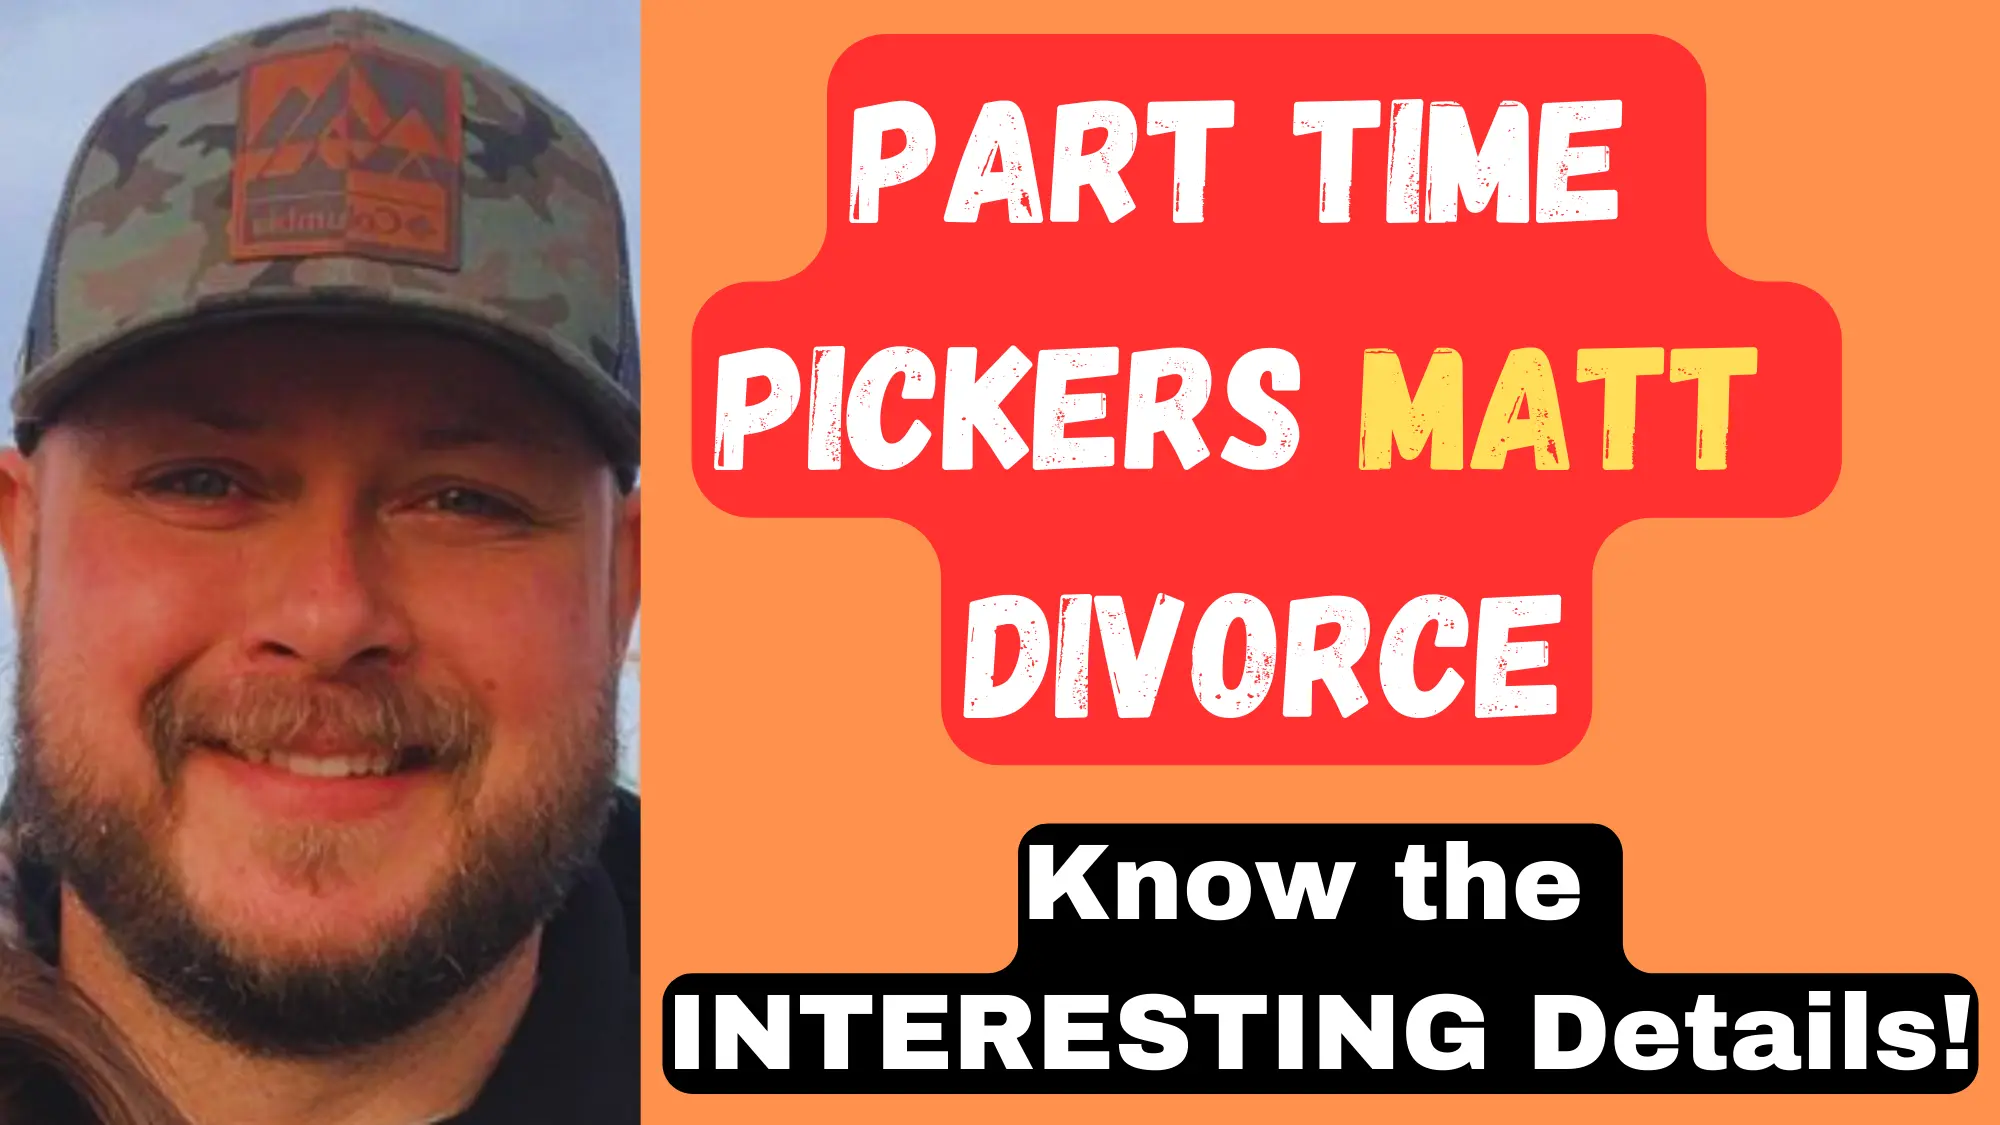 Part Time Pickers Matt divorce